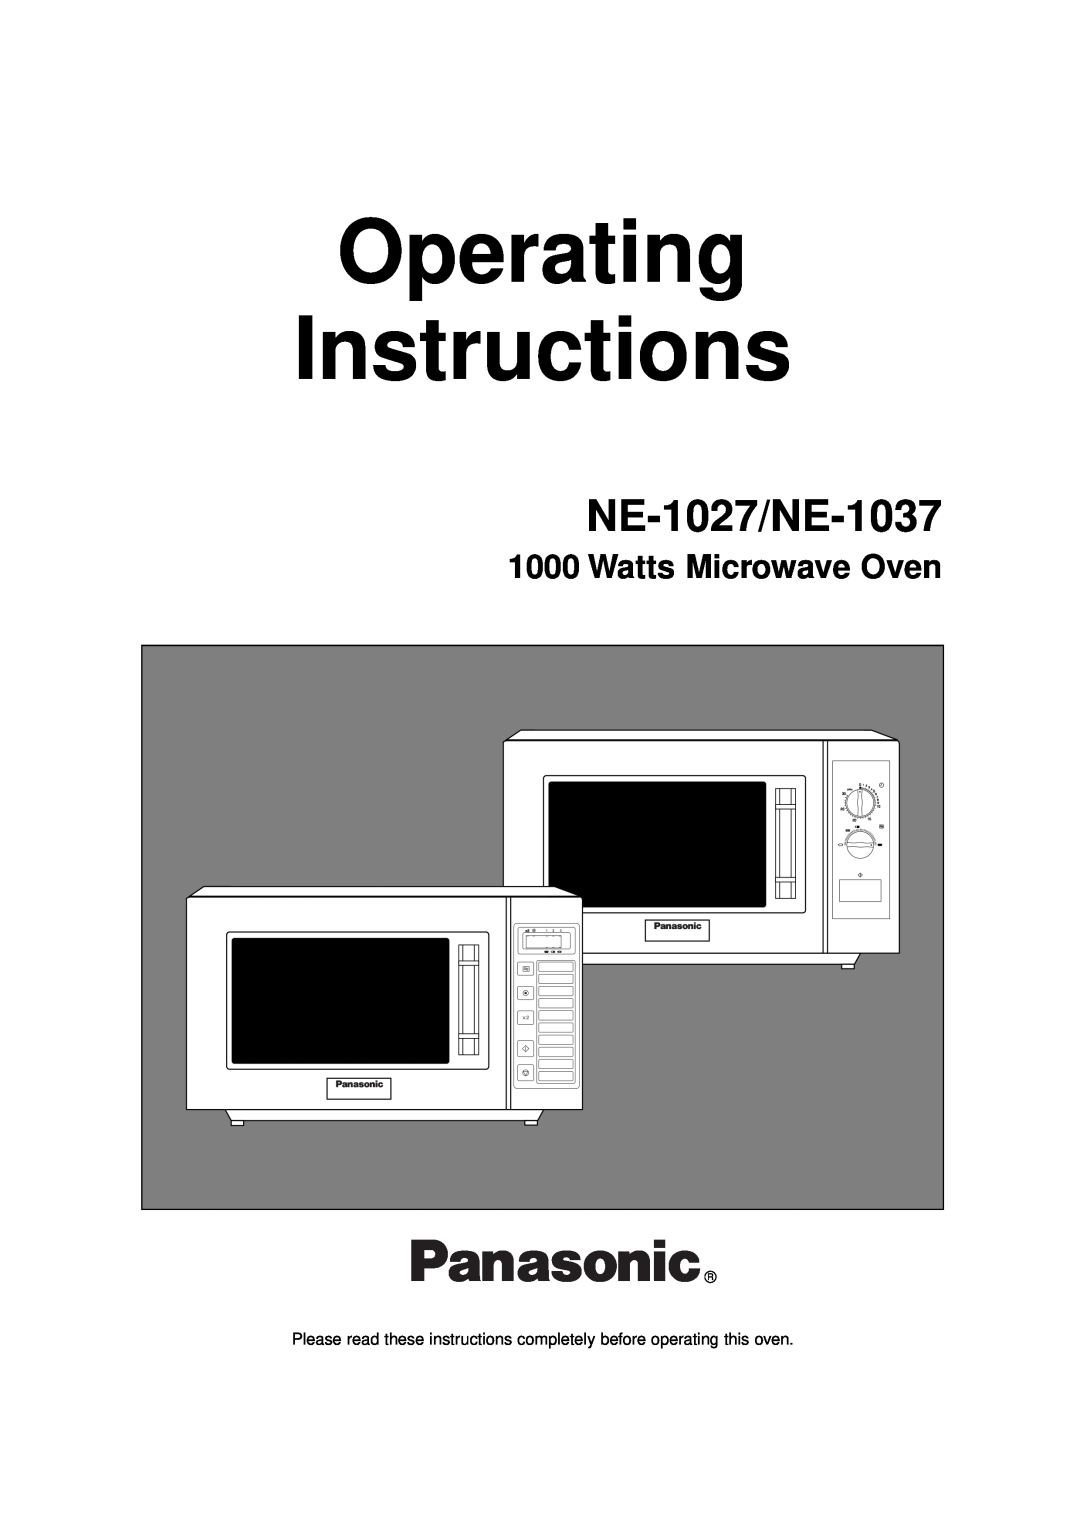 LG Electronics operating instructions Watts Microwave Oven, Operating Instructions, NE-1027/NE-1037 